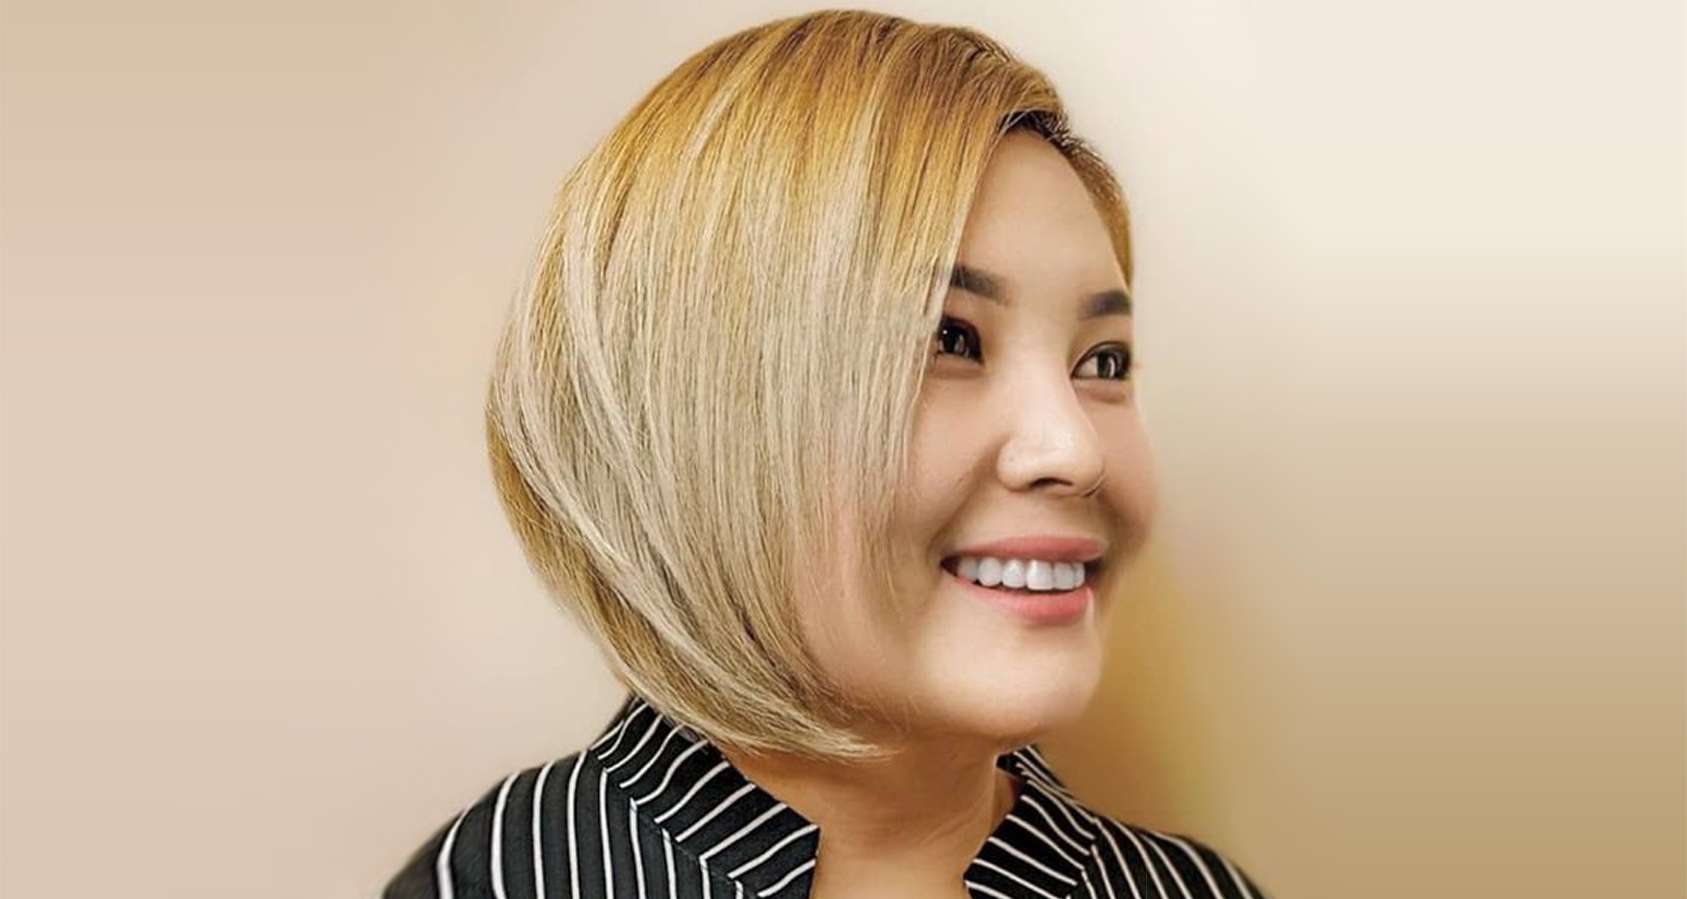 Annmarie Nguyen Short Hairstyles - 1